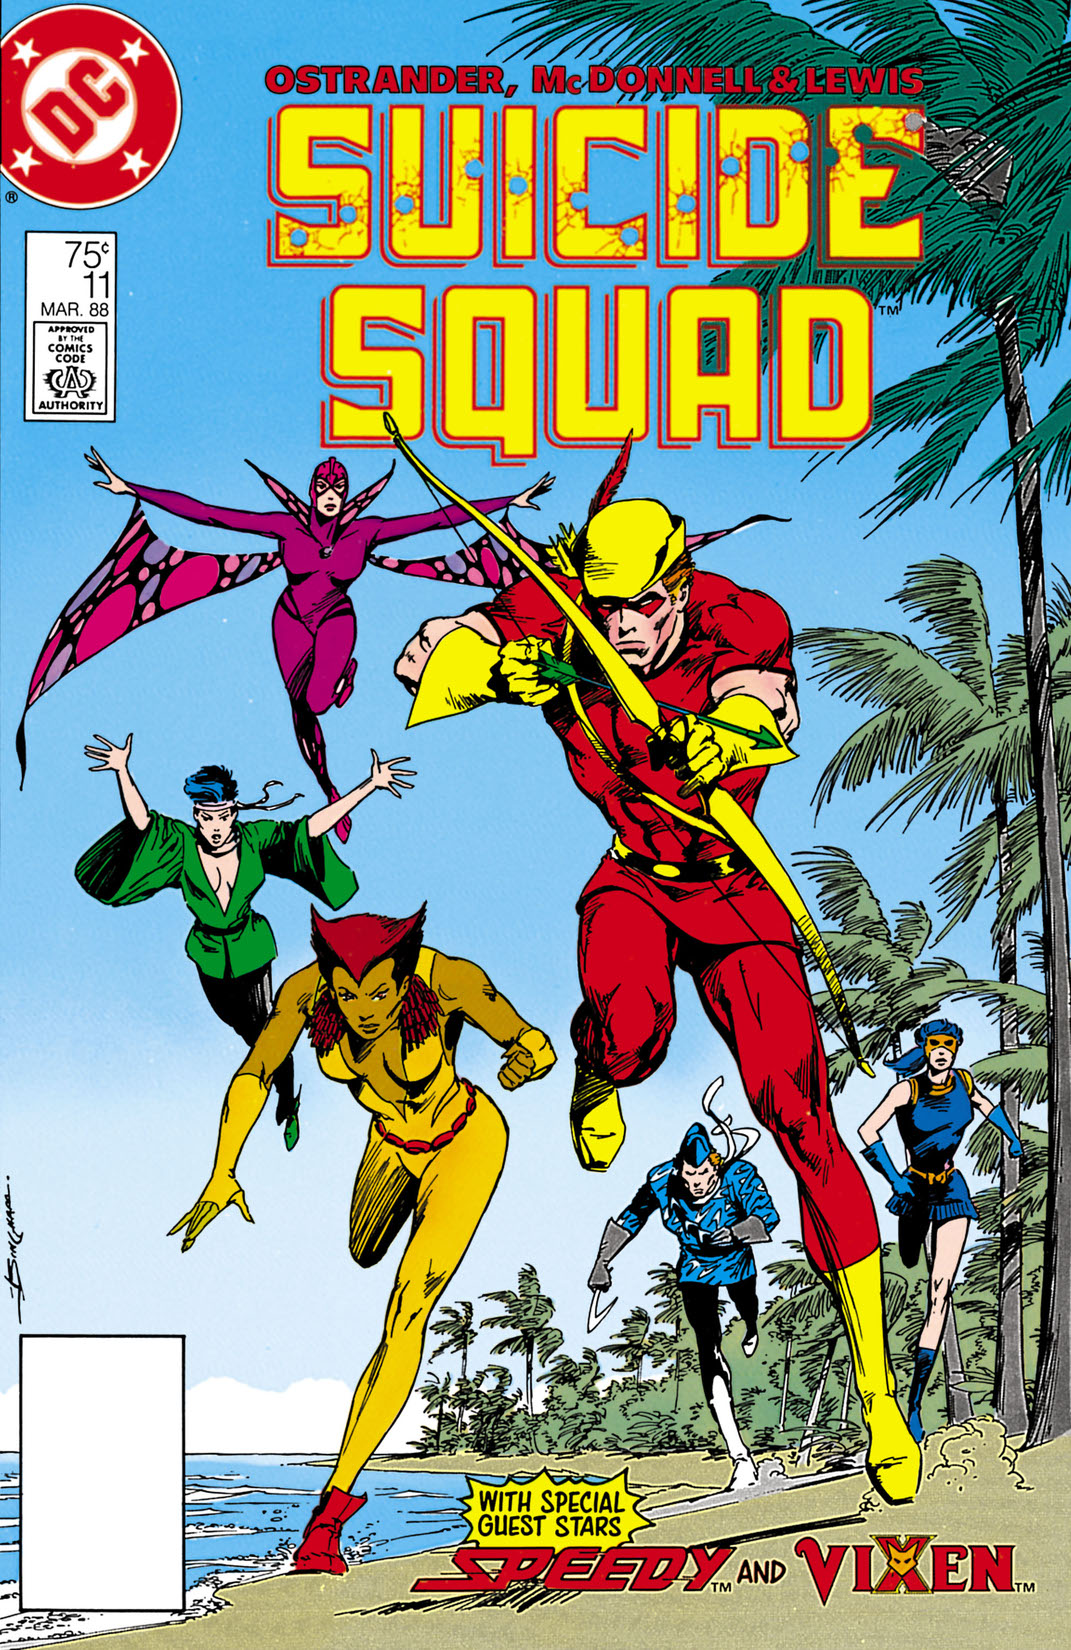 Suicide Squad (1987-) #11 preview images